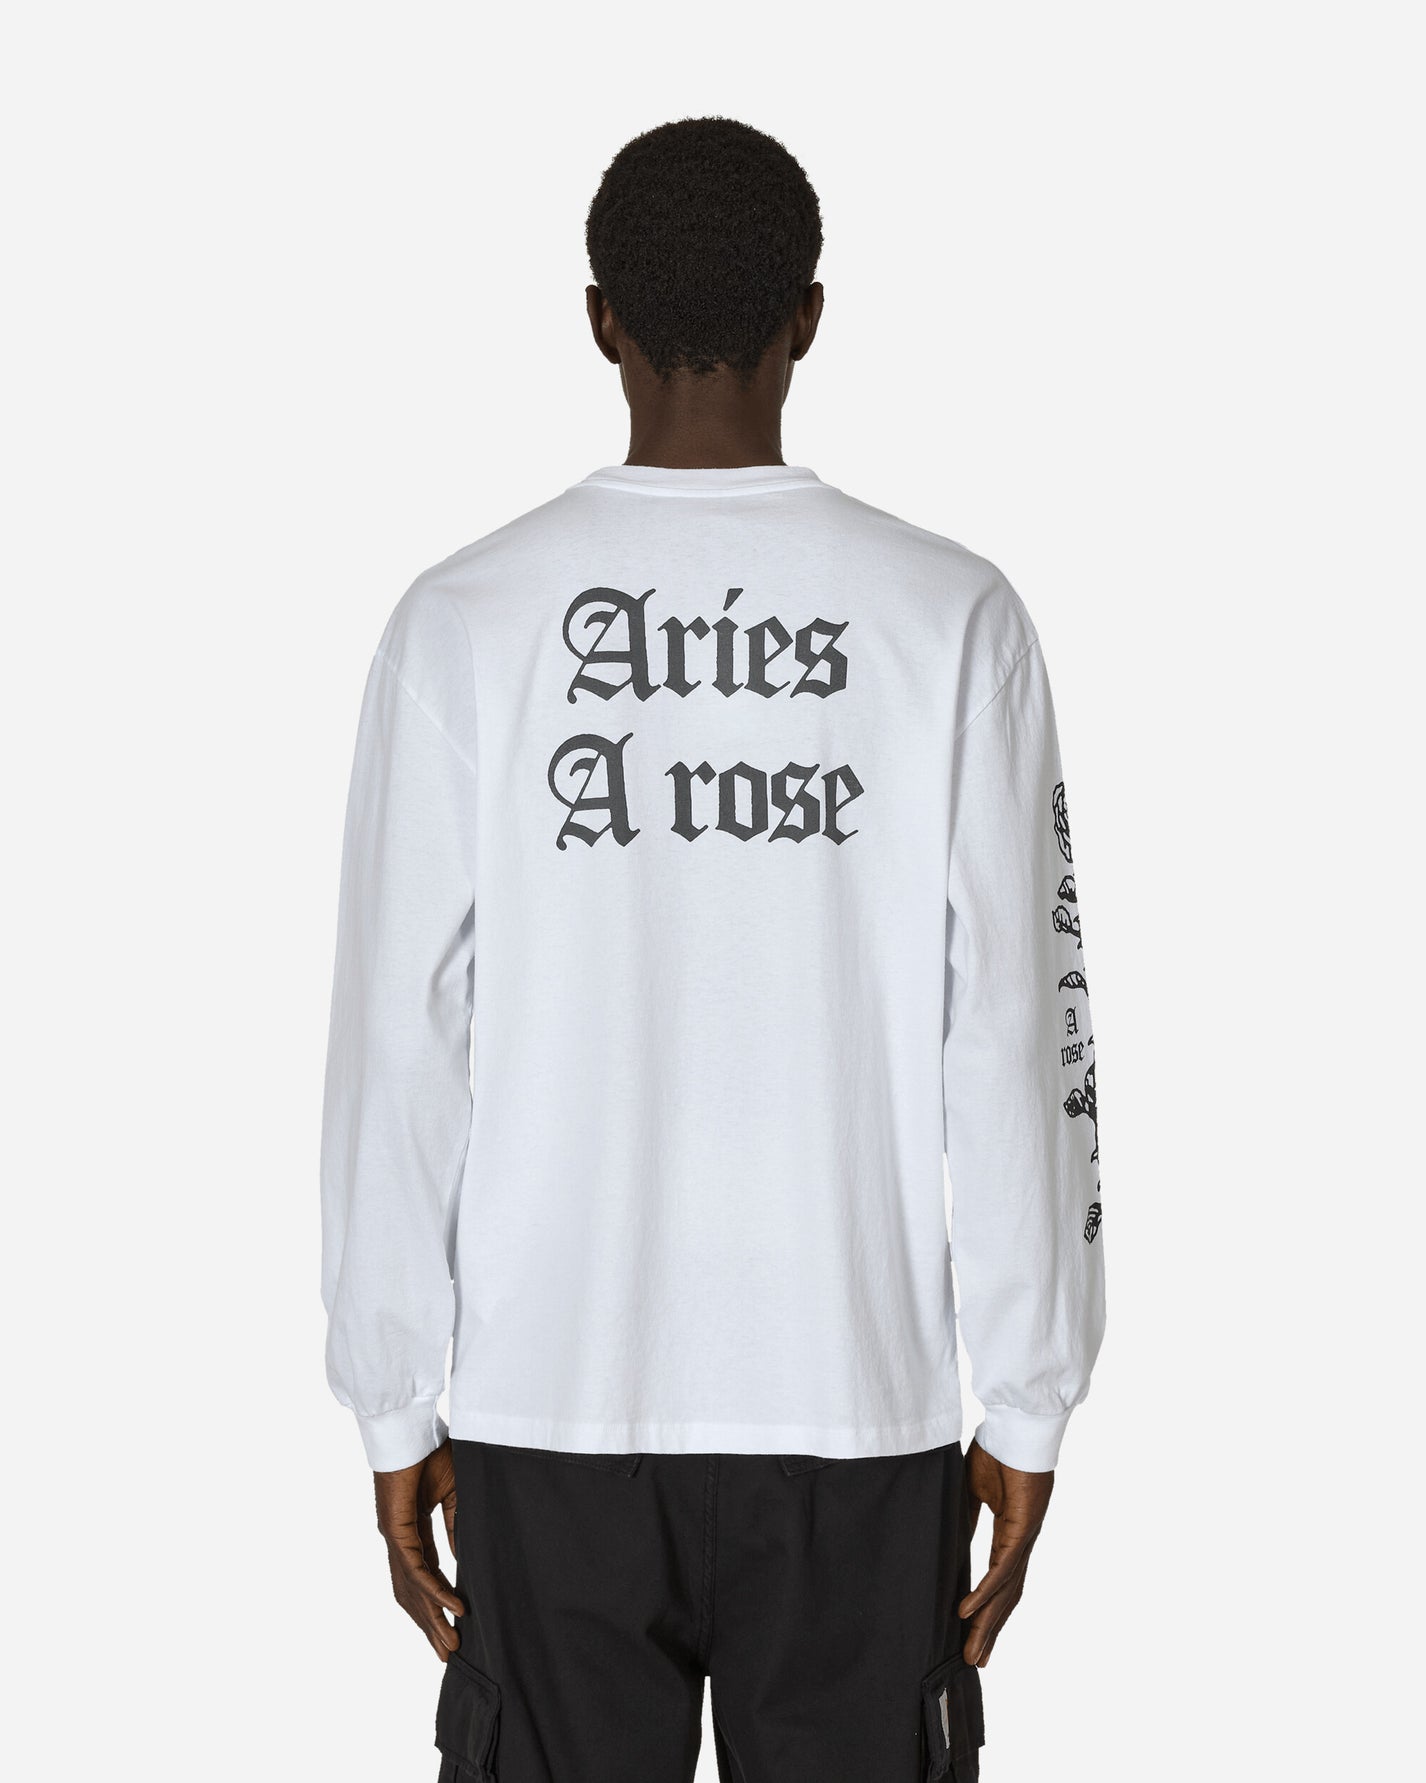 Aries Aries Arose LS Tee White T-Shirts Longsleeve AR6002001 WHT